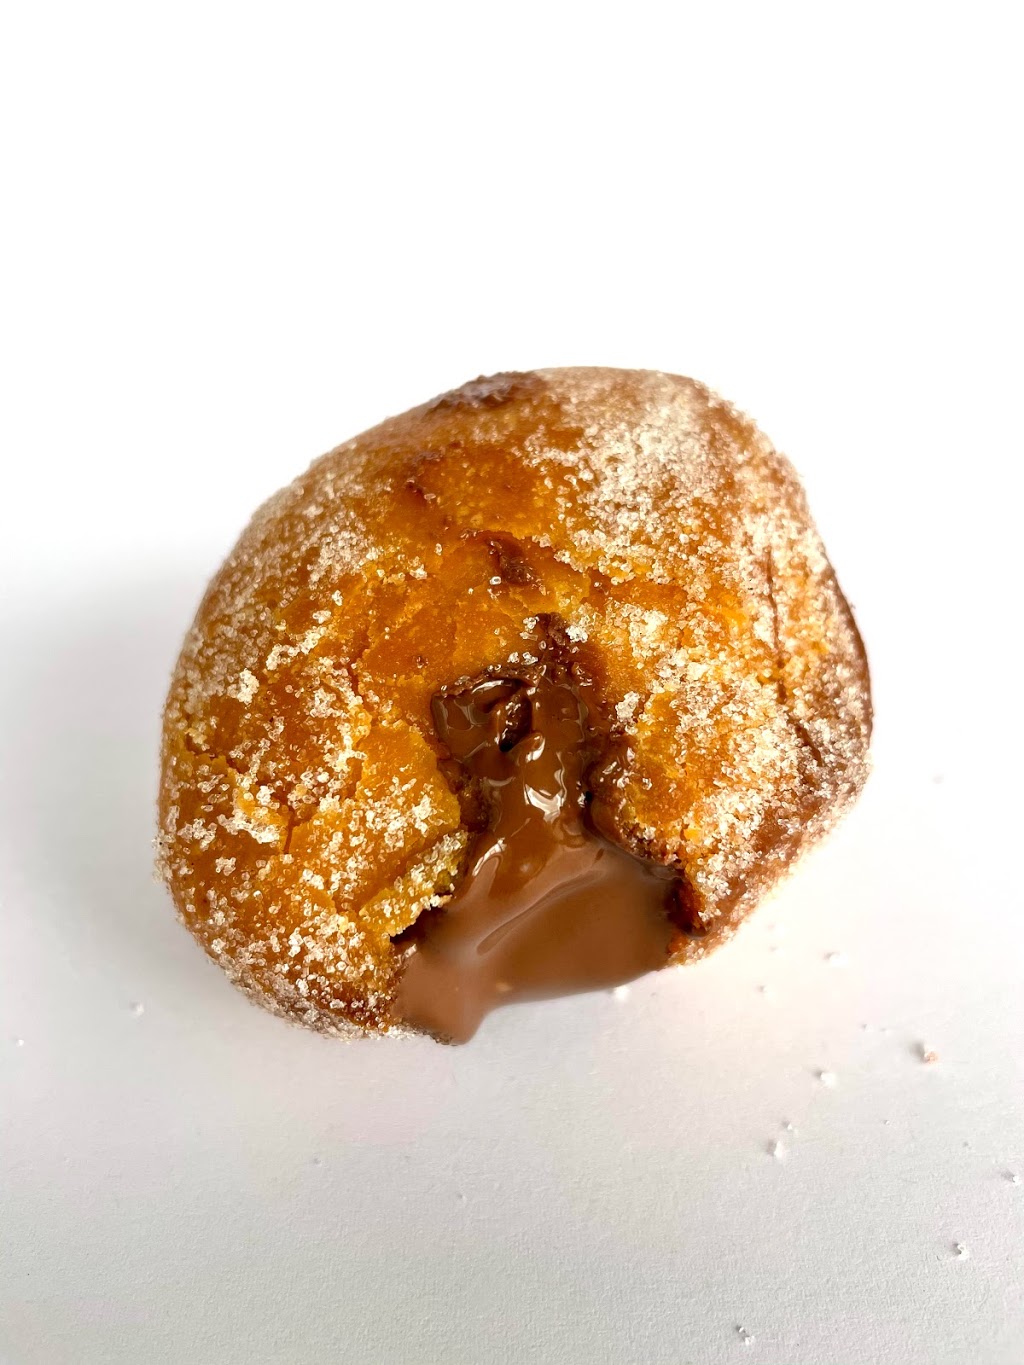 Dandee Donuts Hallam Roadside | bakery | 151 Princes Hwy, Hallam VIC 3803, Australia | 0490049368 OR +61 490 049 368